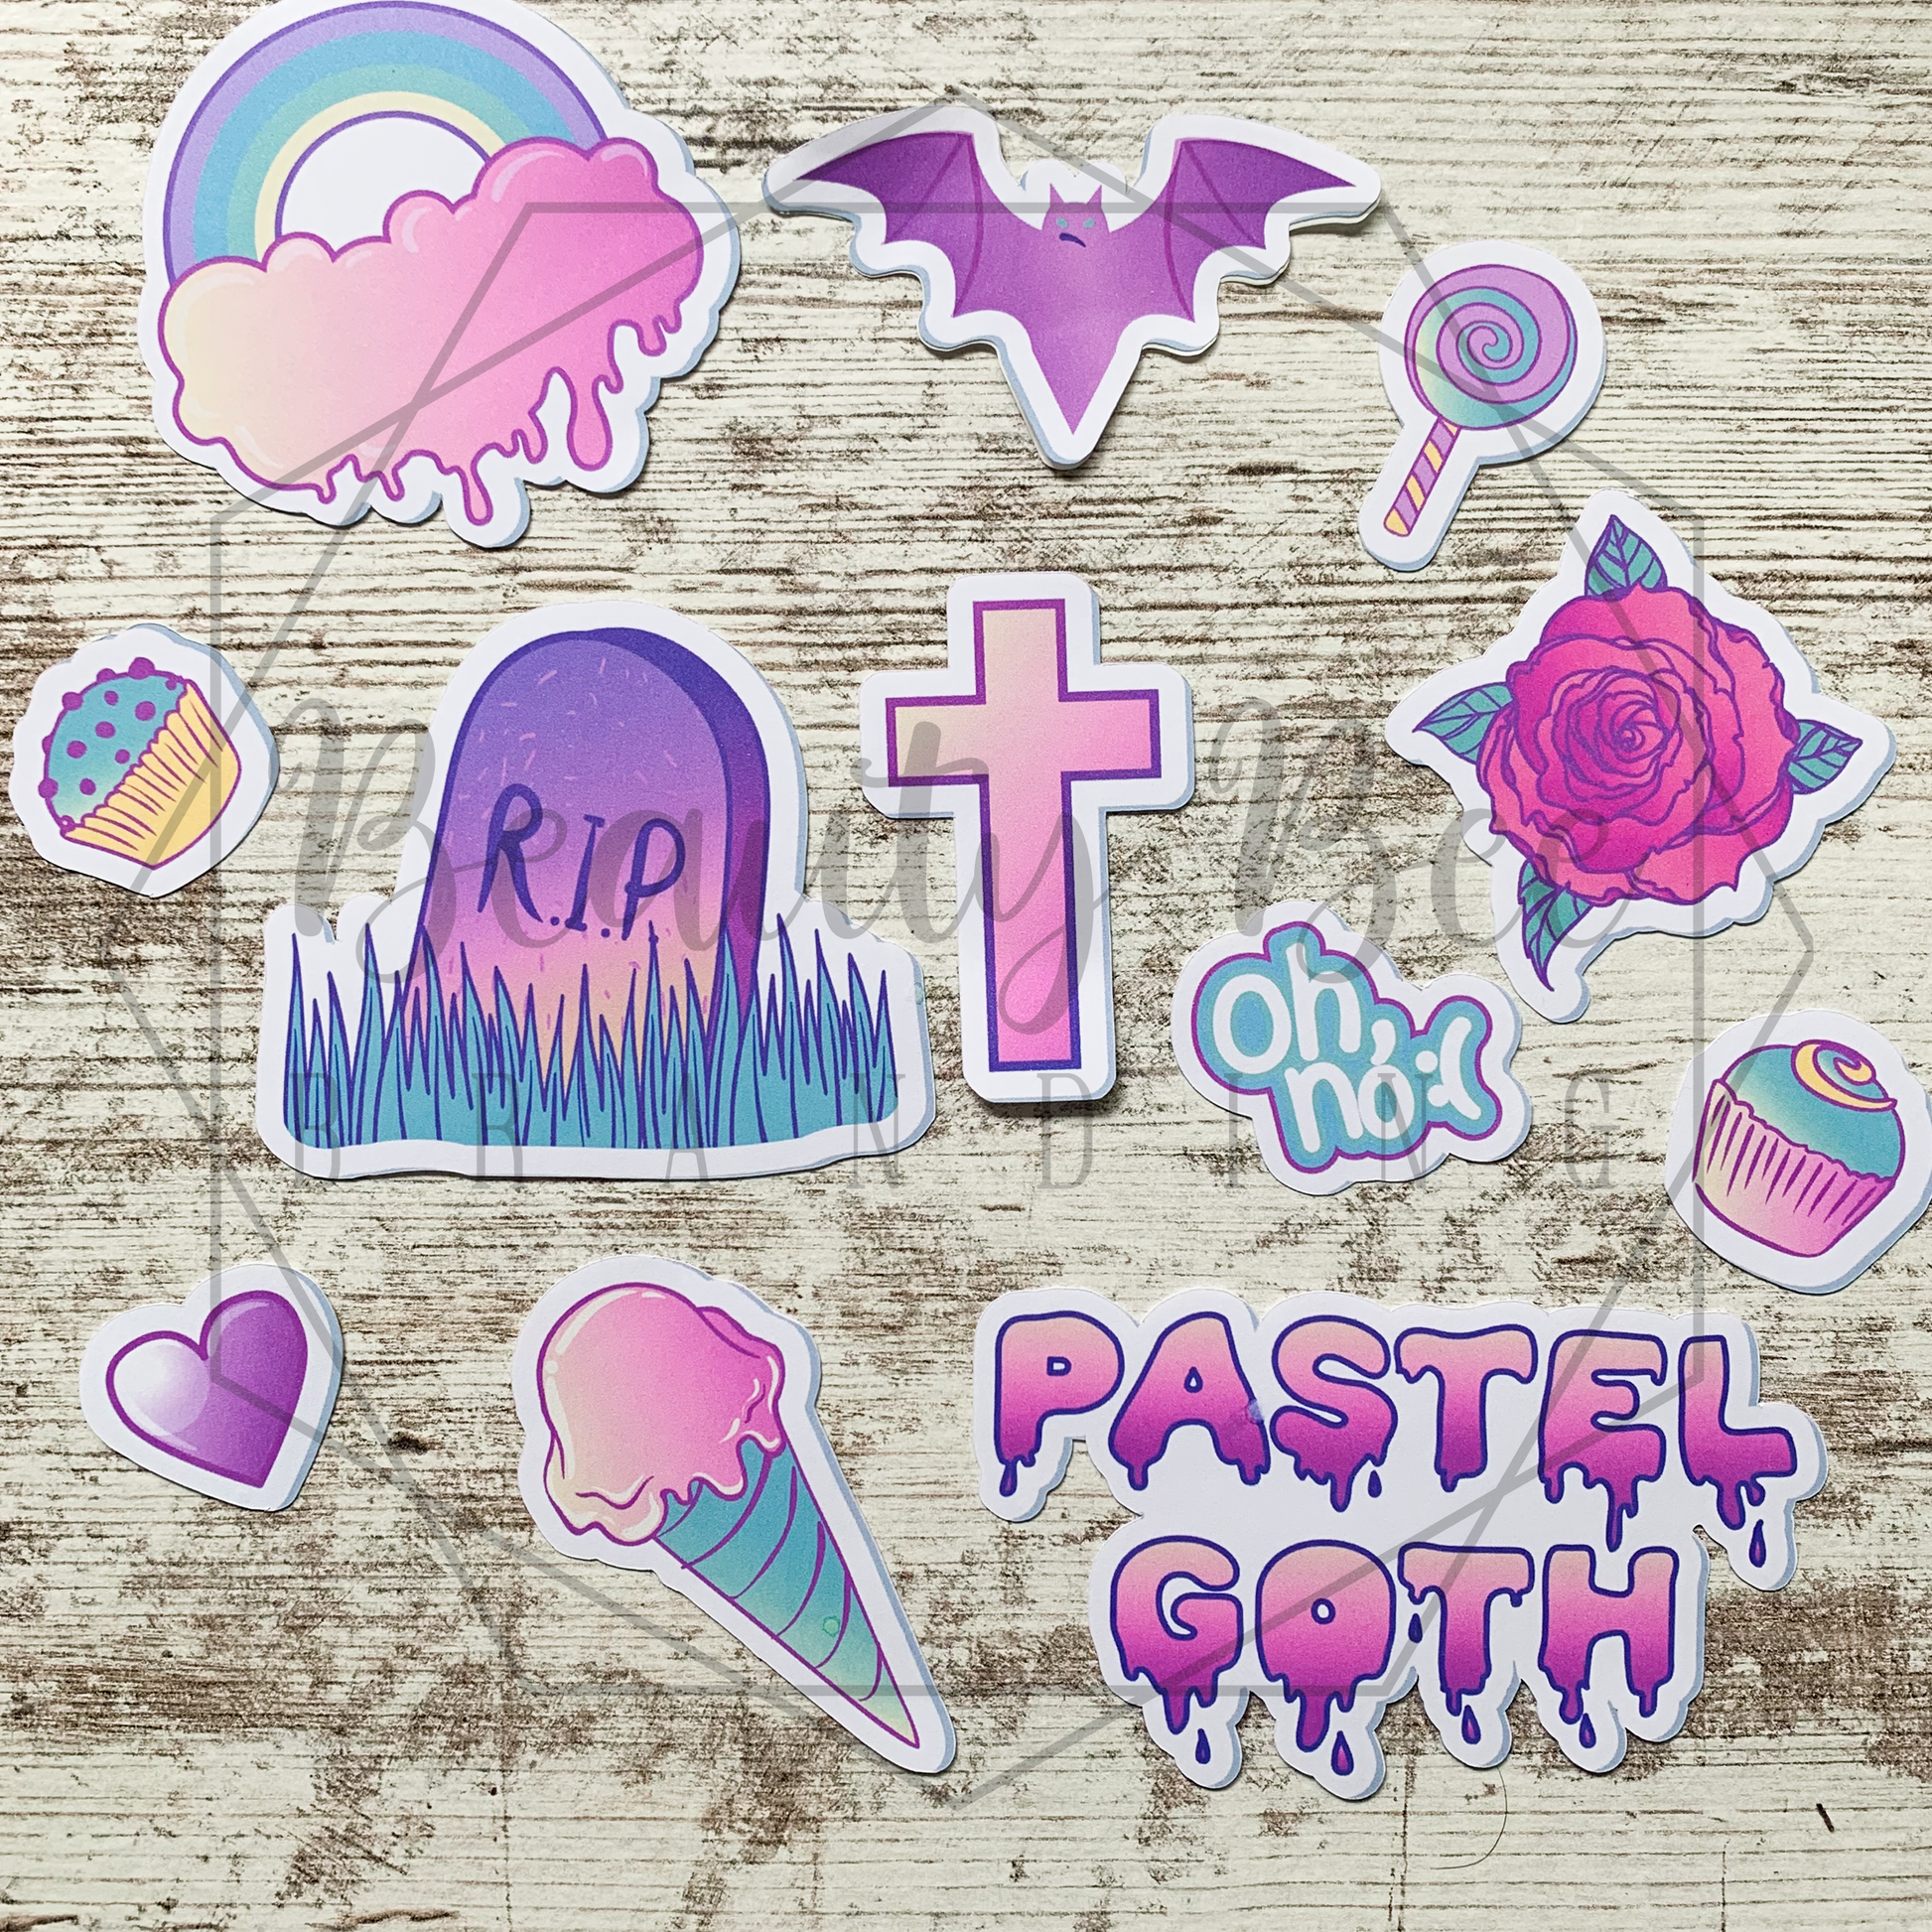 Kawaii Pastel Goth Stickers